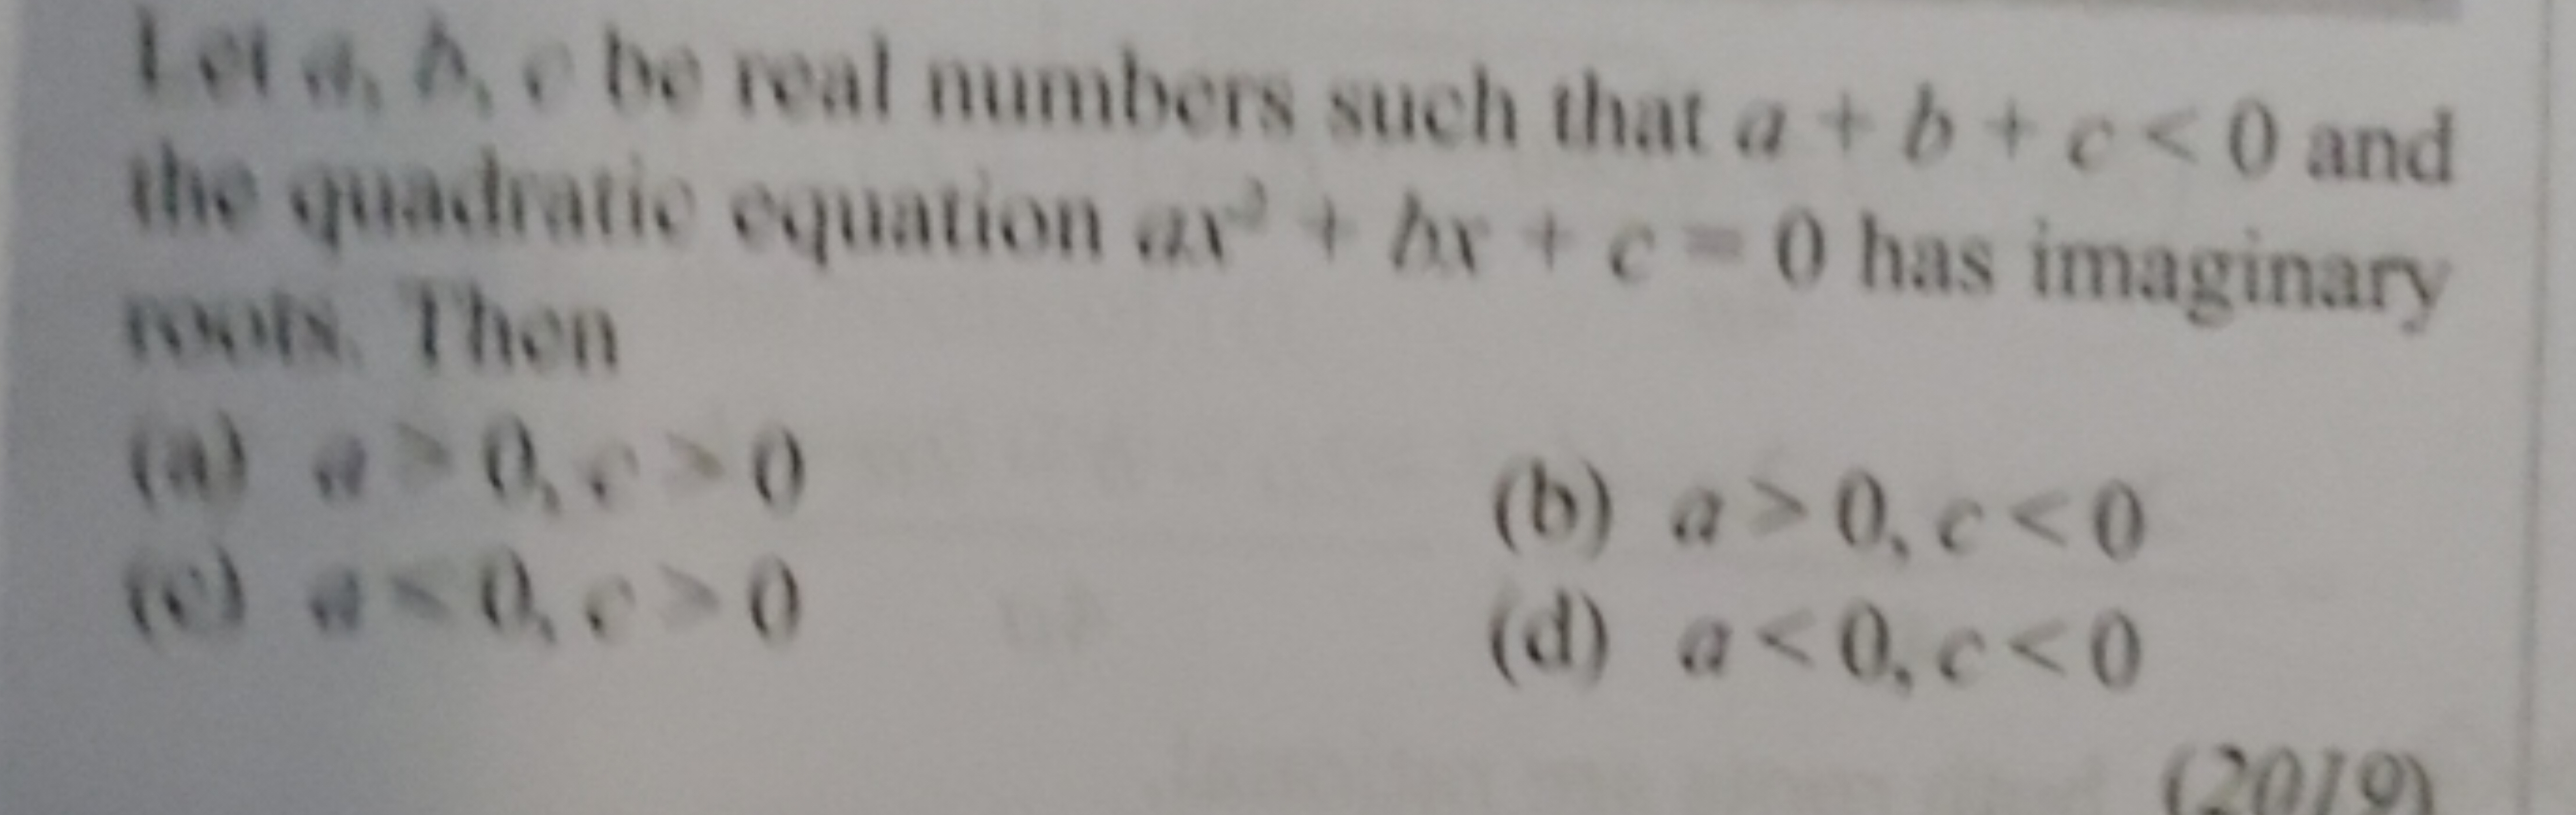 1 et a,A,be real numbers such that a+b+c<0 and the quadratie equation 